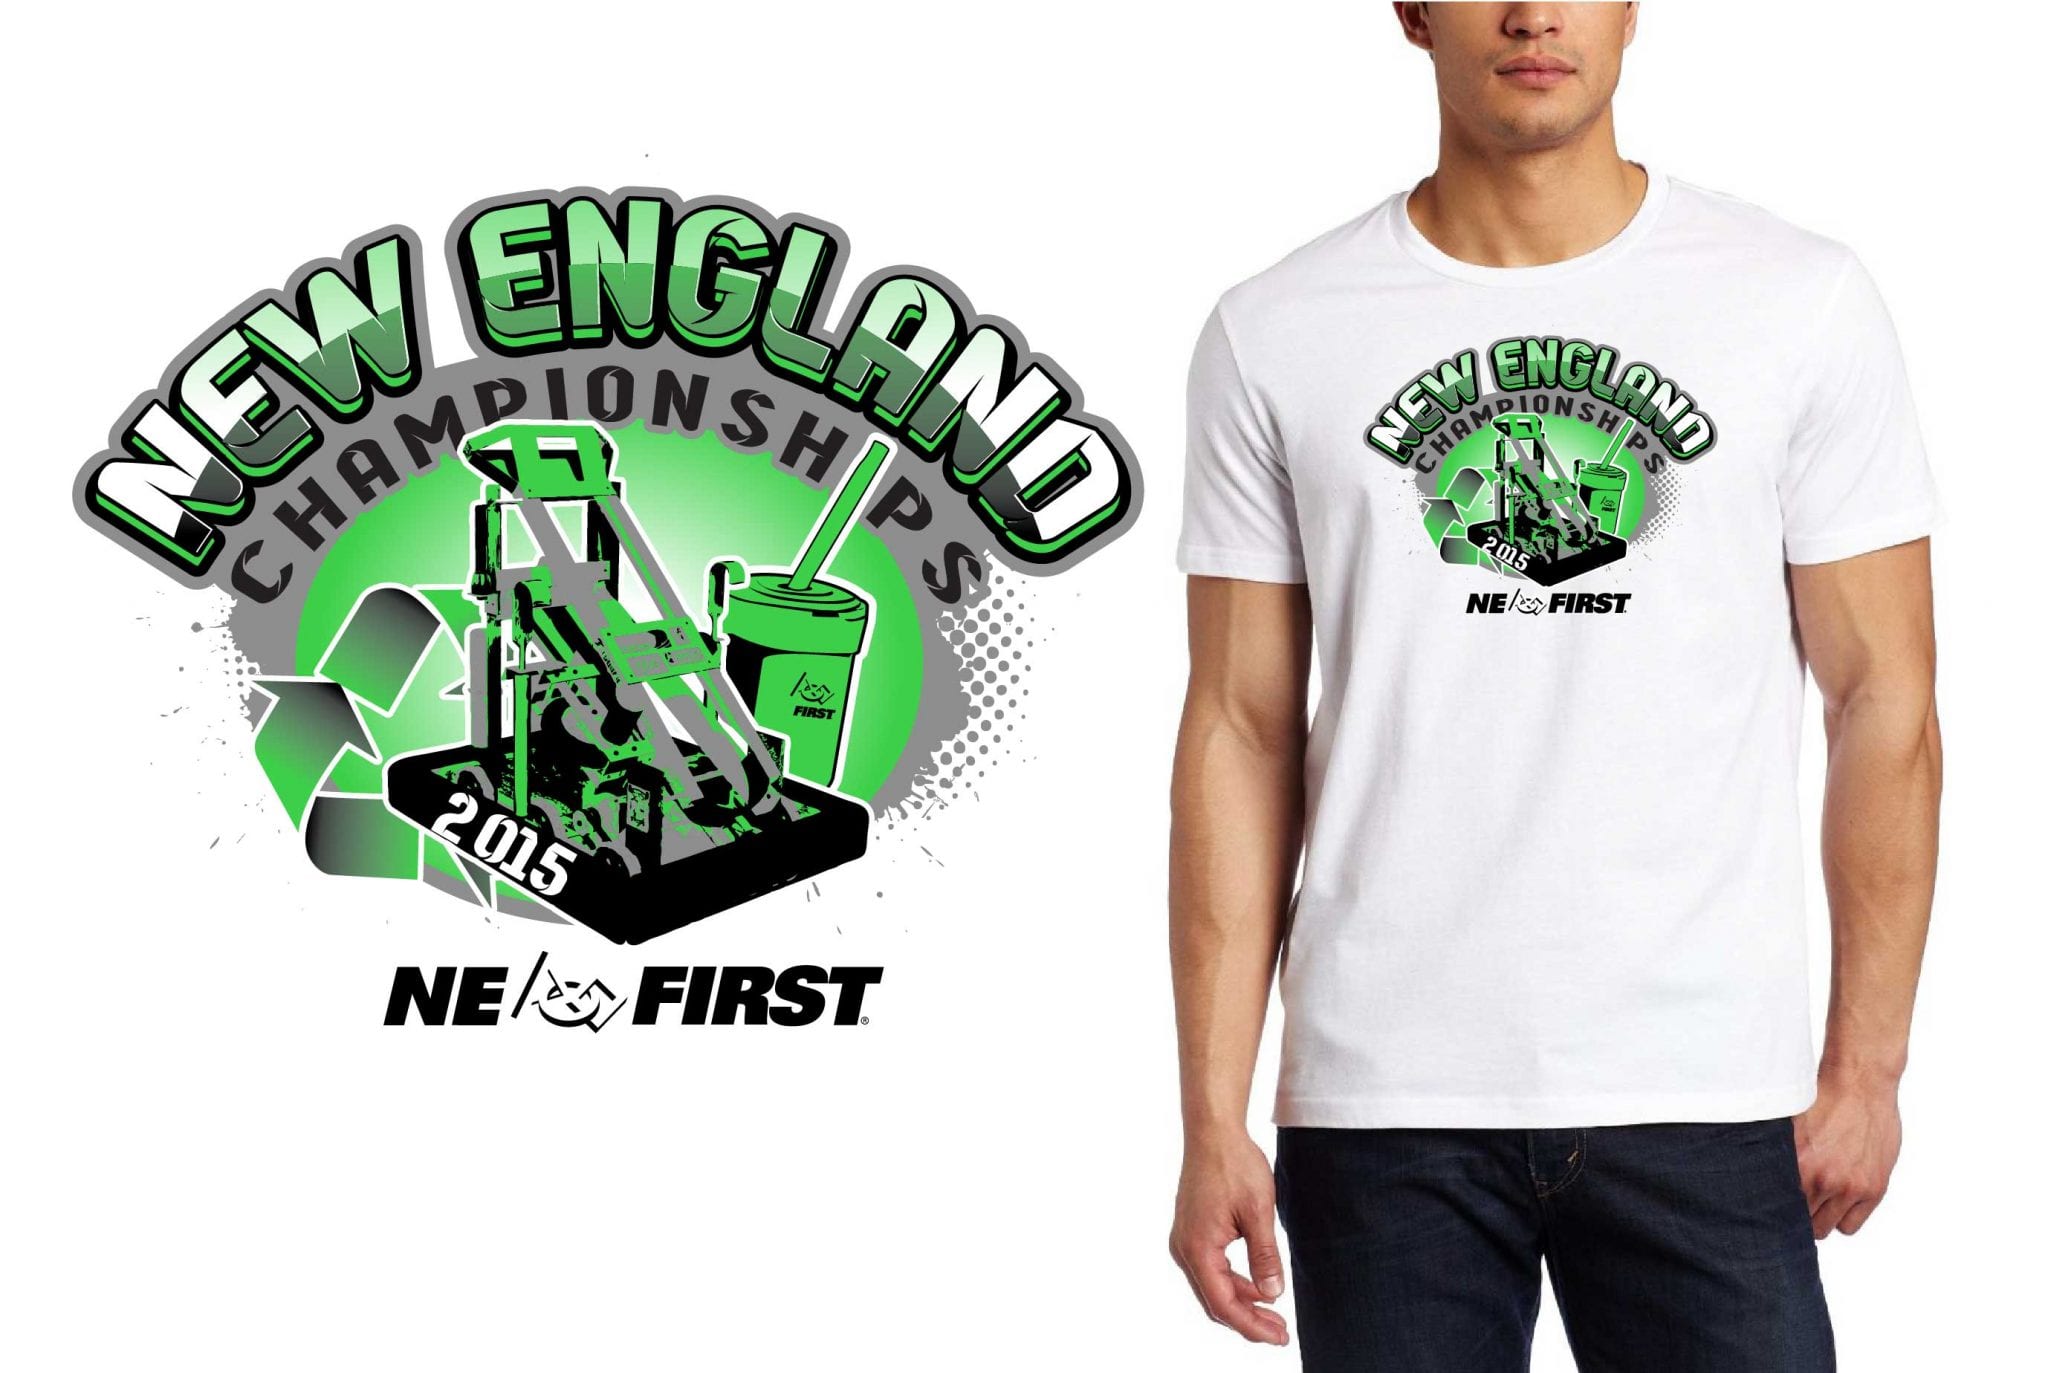 New robotics tshirt vector logo design 2015 New England Championships